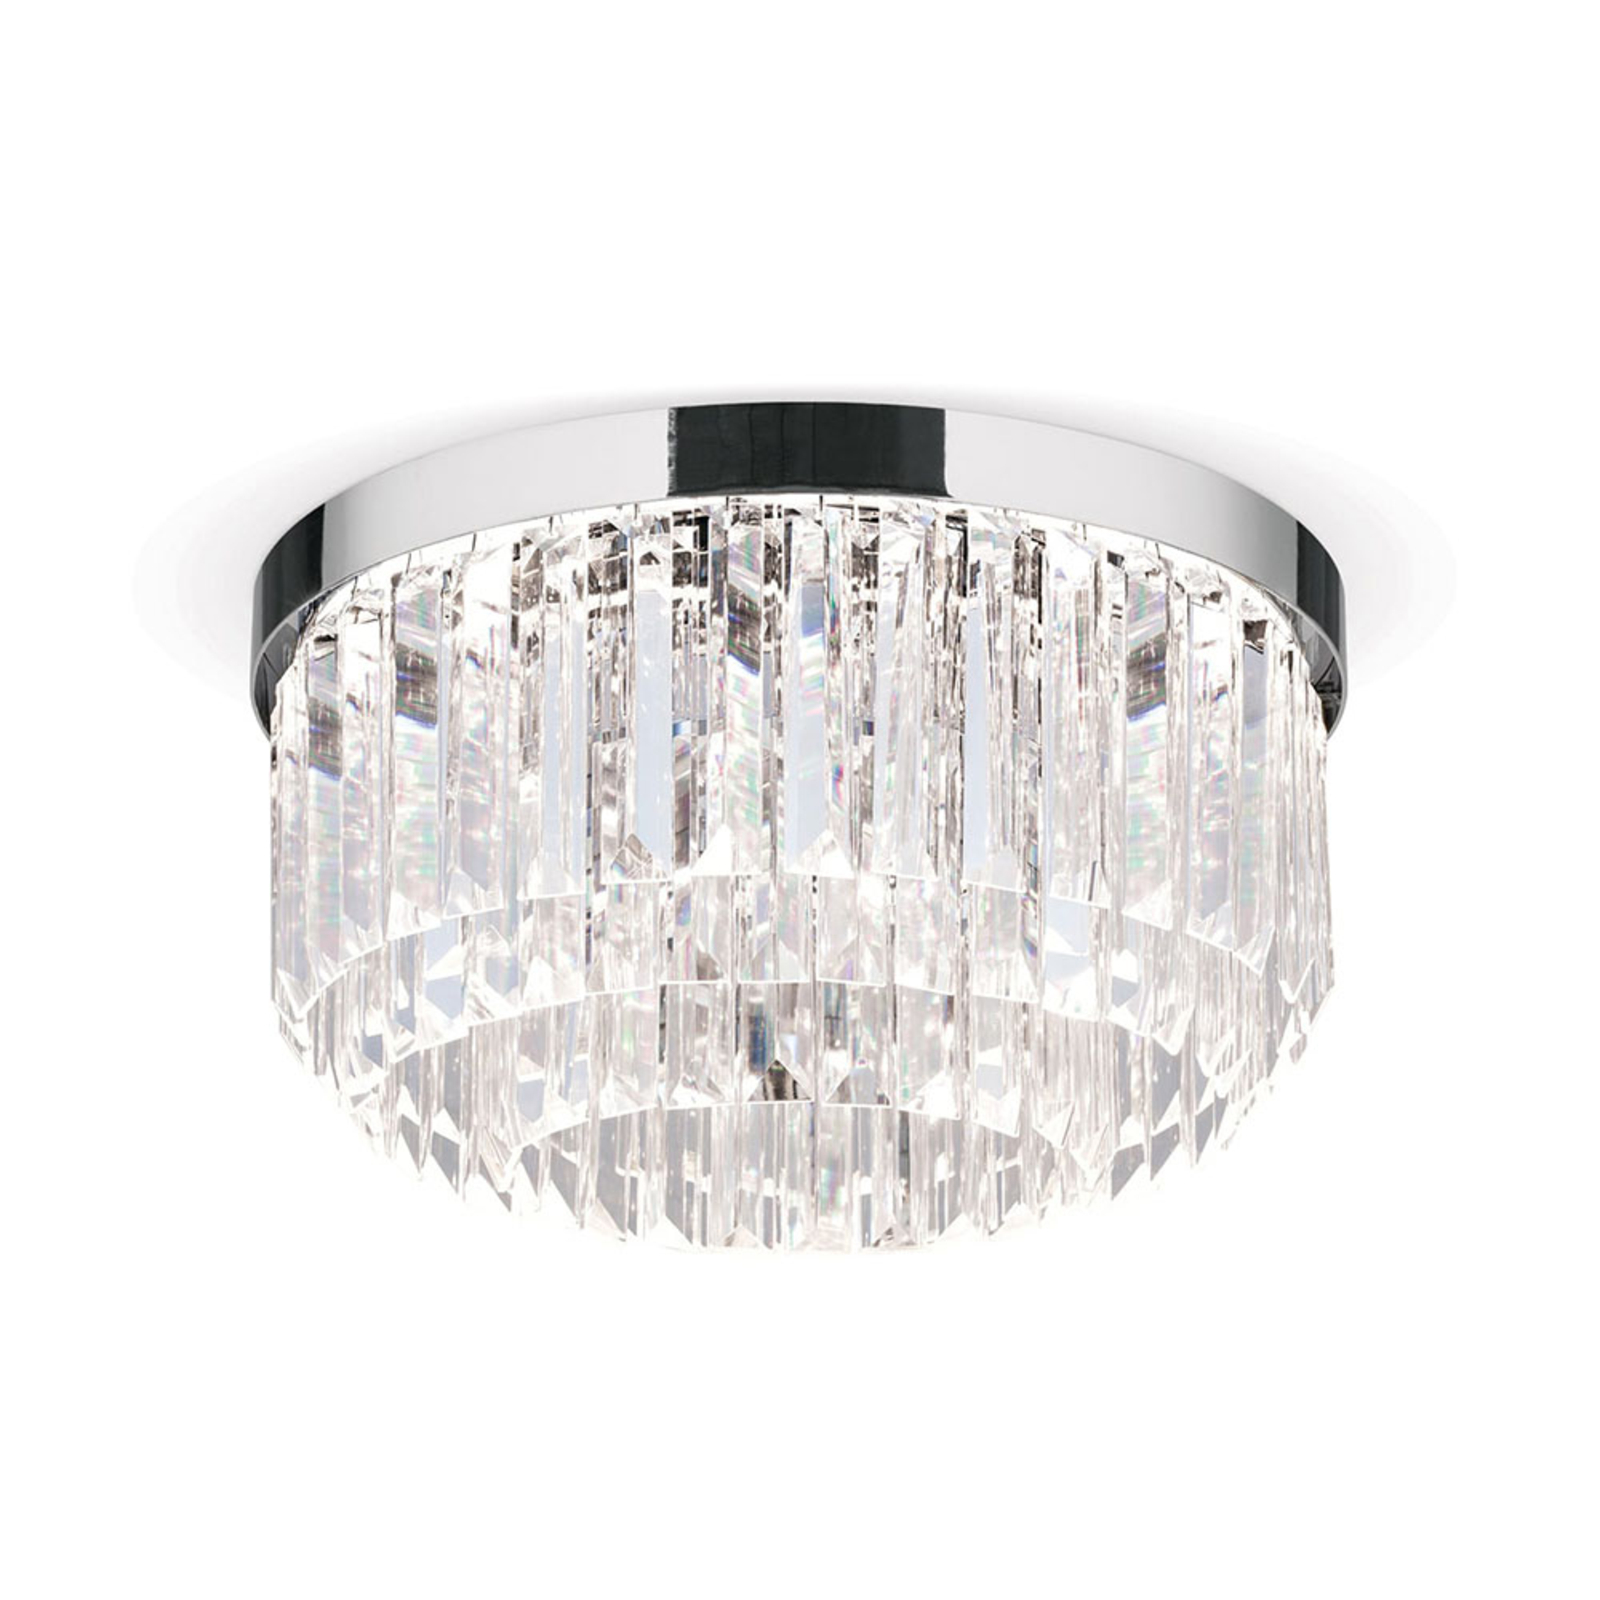 LED-Deckenleuchte Prism, chrom, Ø 35 cm